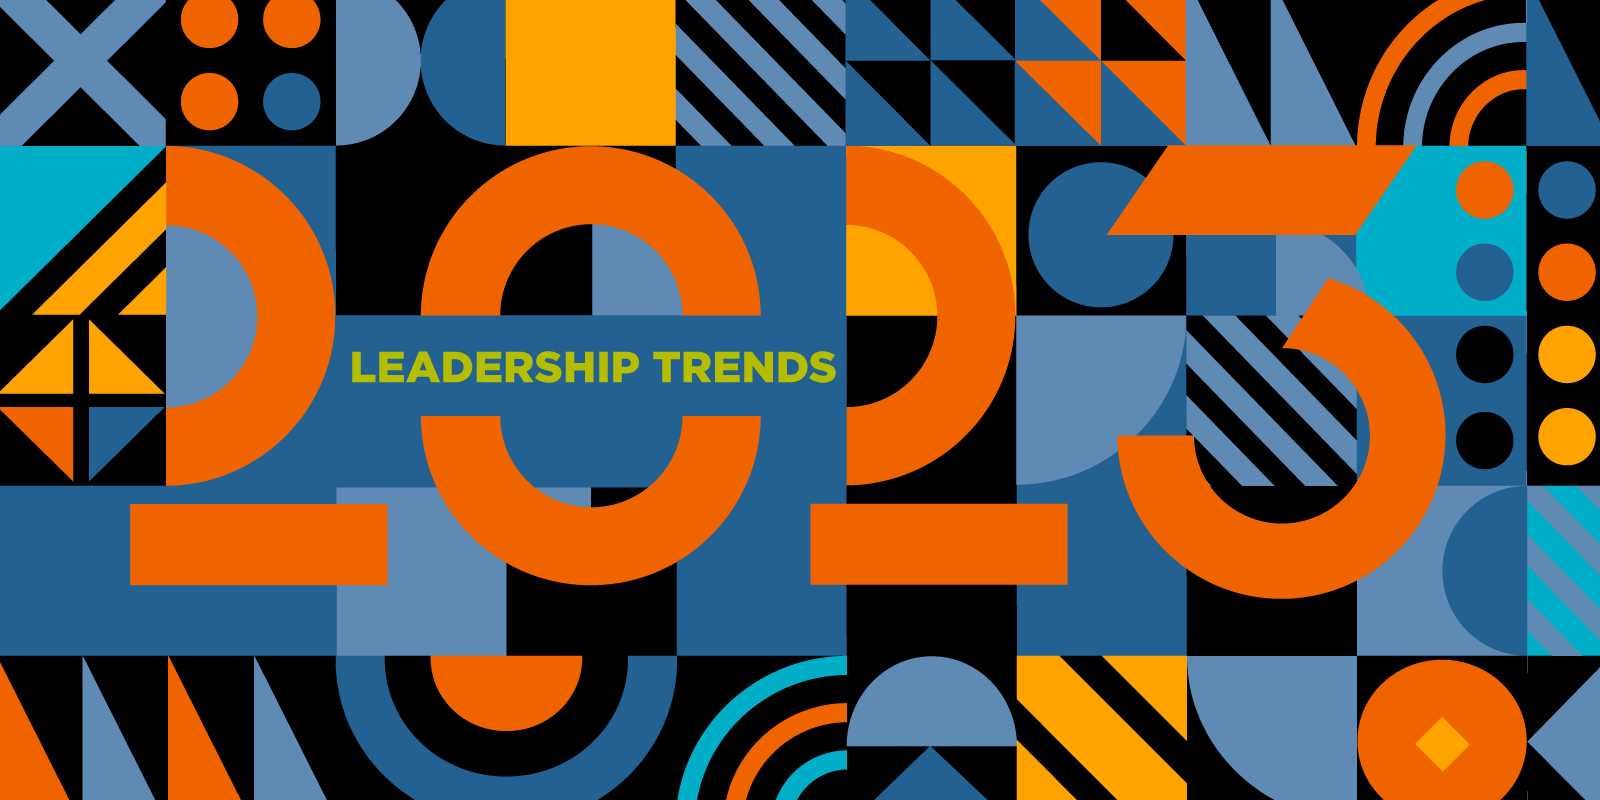 Key leadership trends for 2023